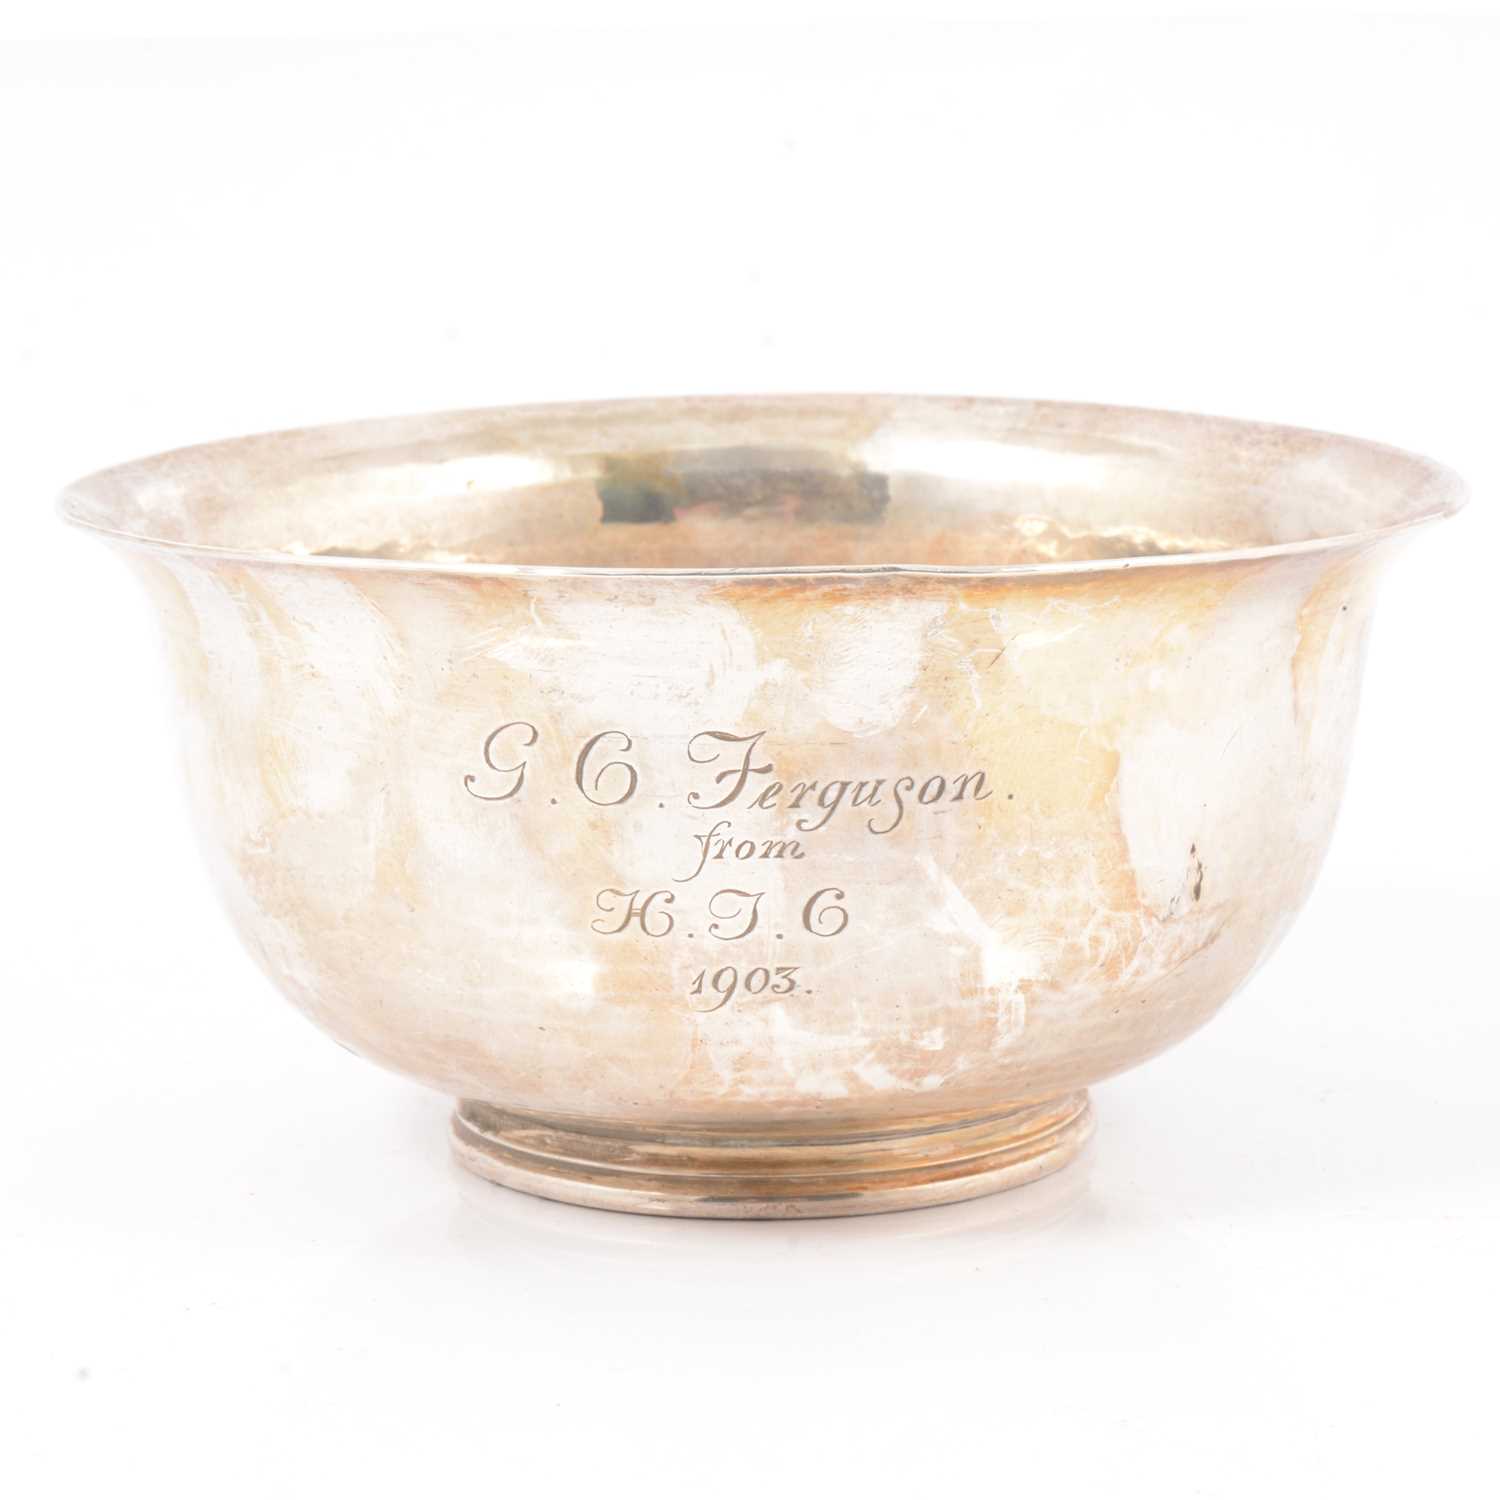 Lot 205 - Arts & Crafts silver presentation bowl